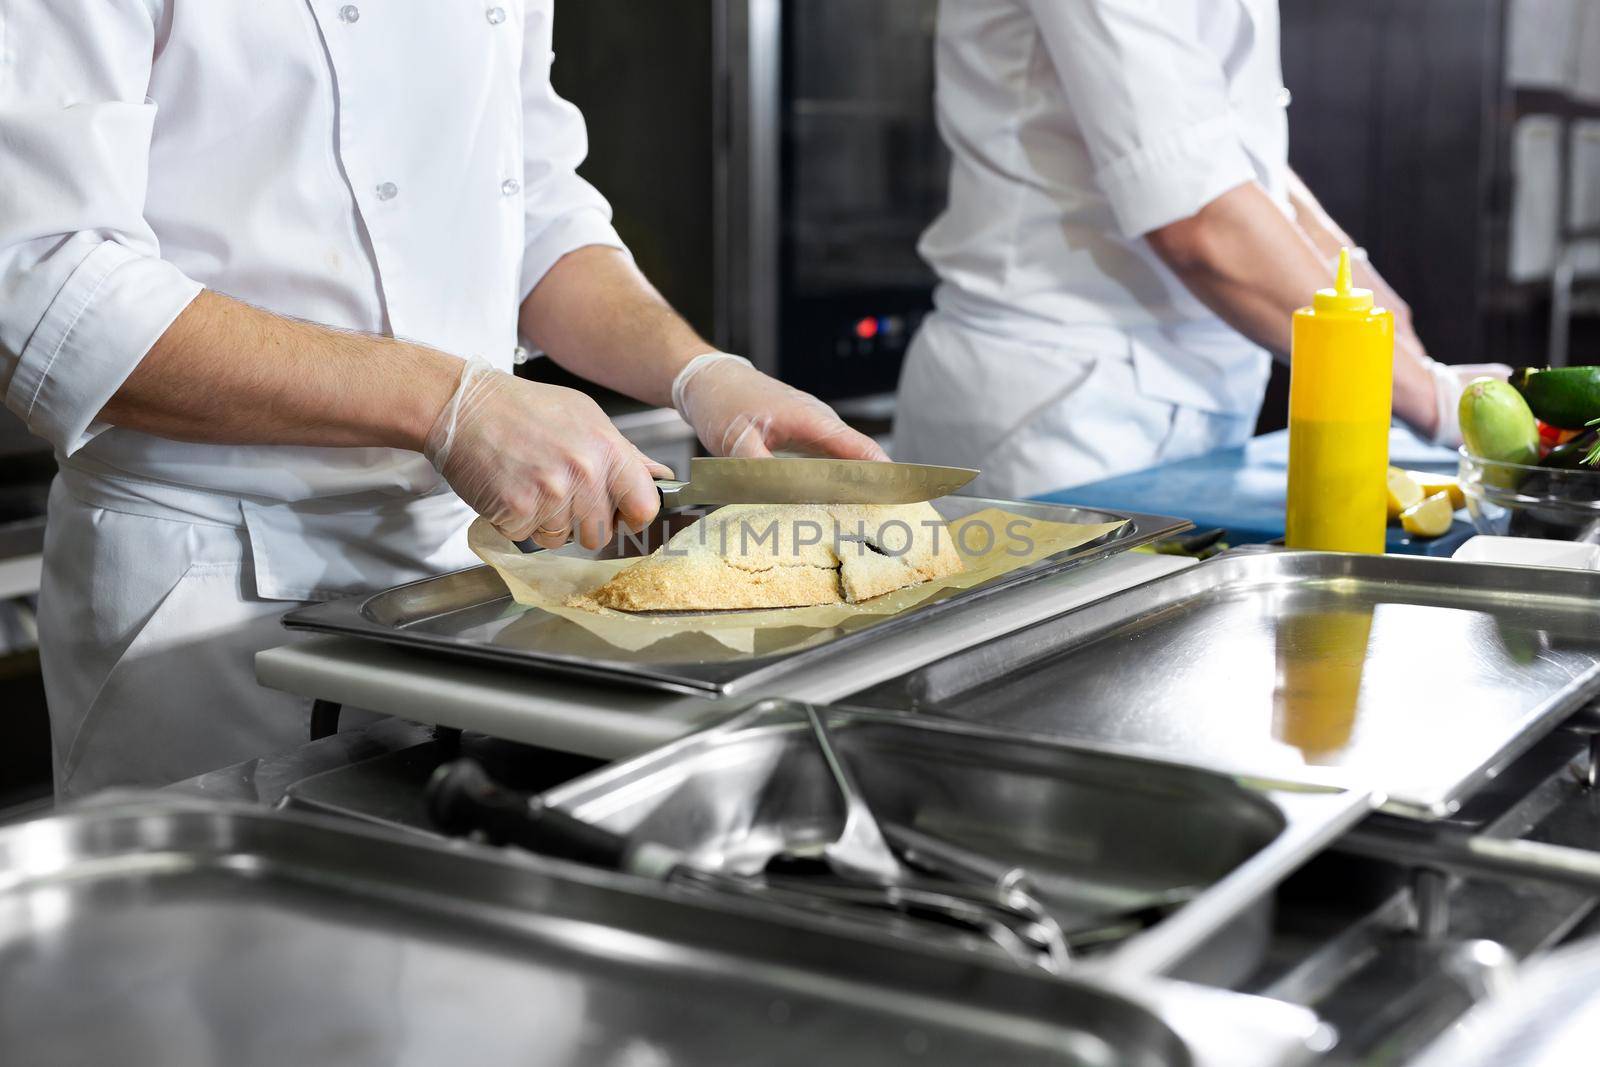 Chefs prepare delicious dishes in the kitchen by StudioPeace